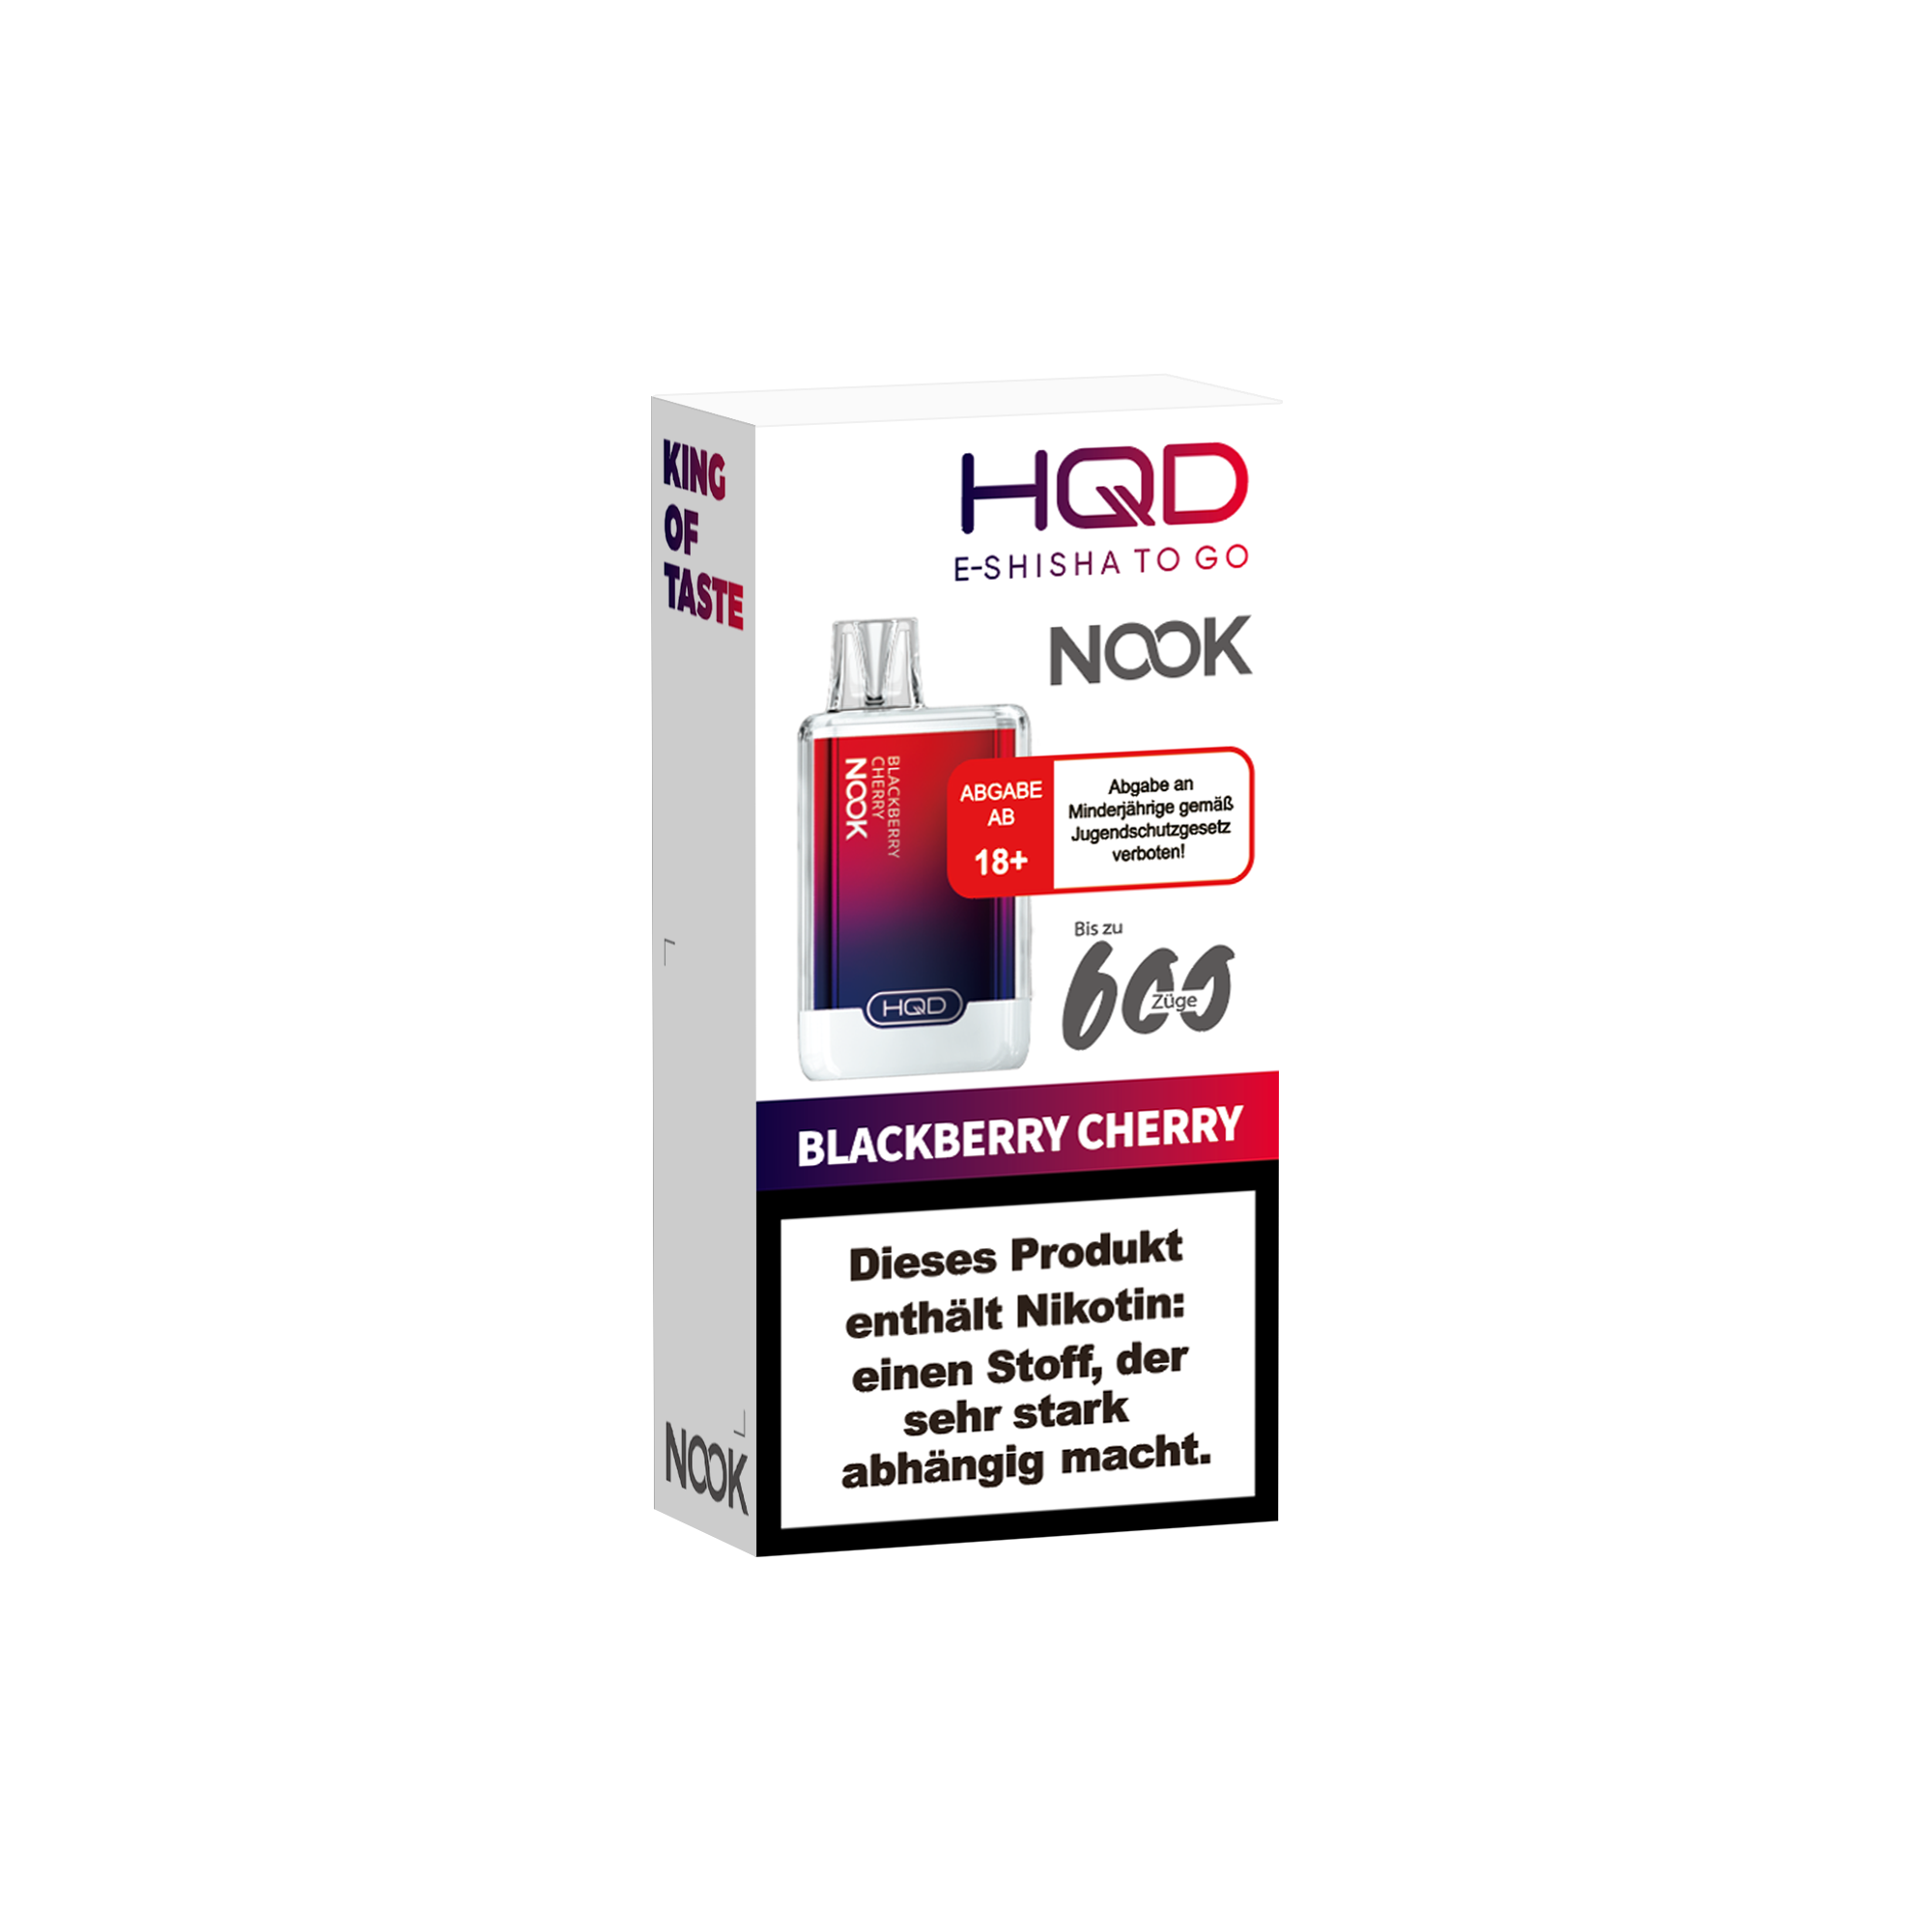 E-Zigarette HQD Nook BLACKBERRY CHERRY 18mg Nikotin 600